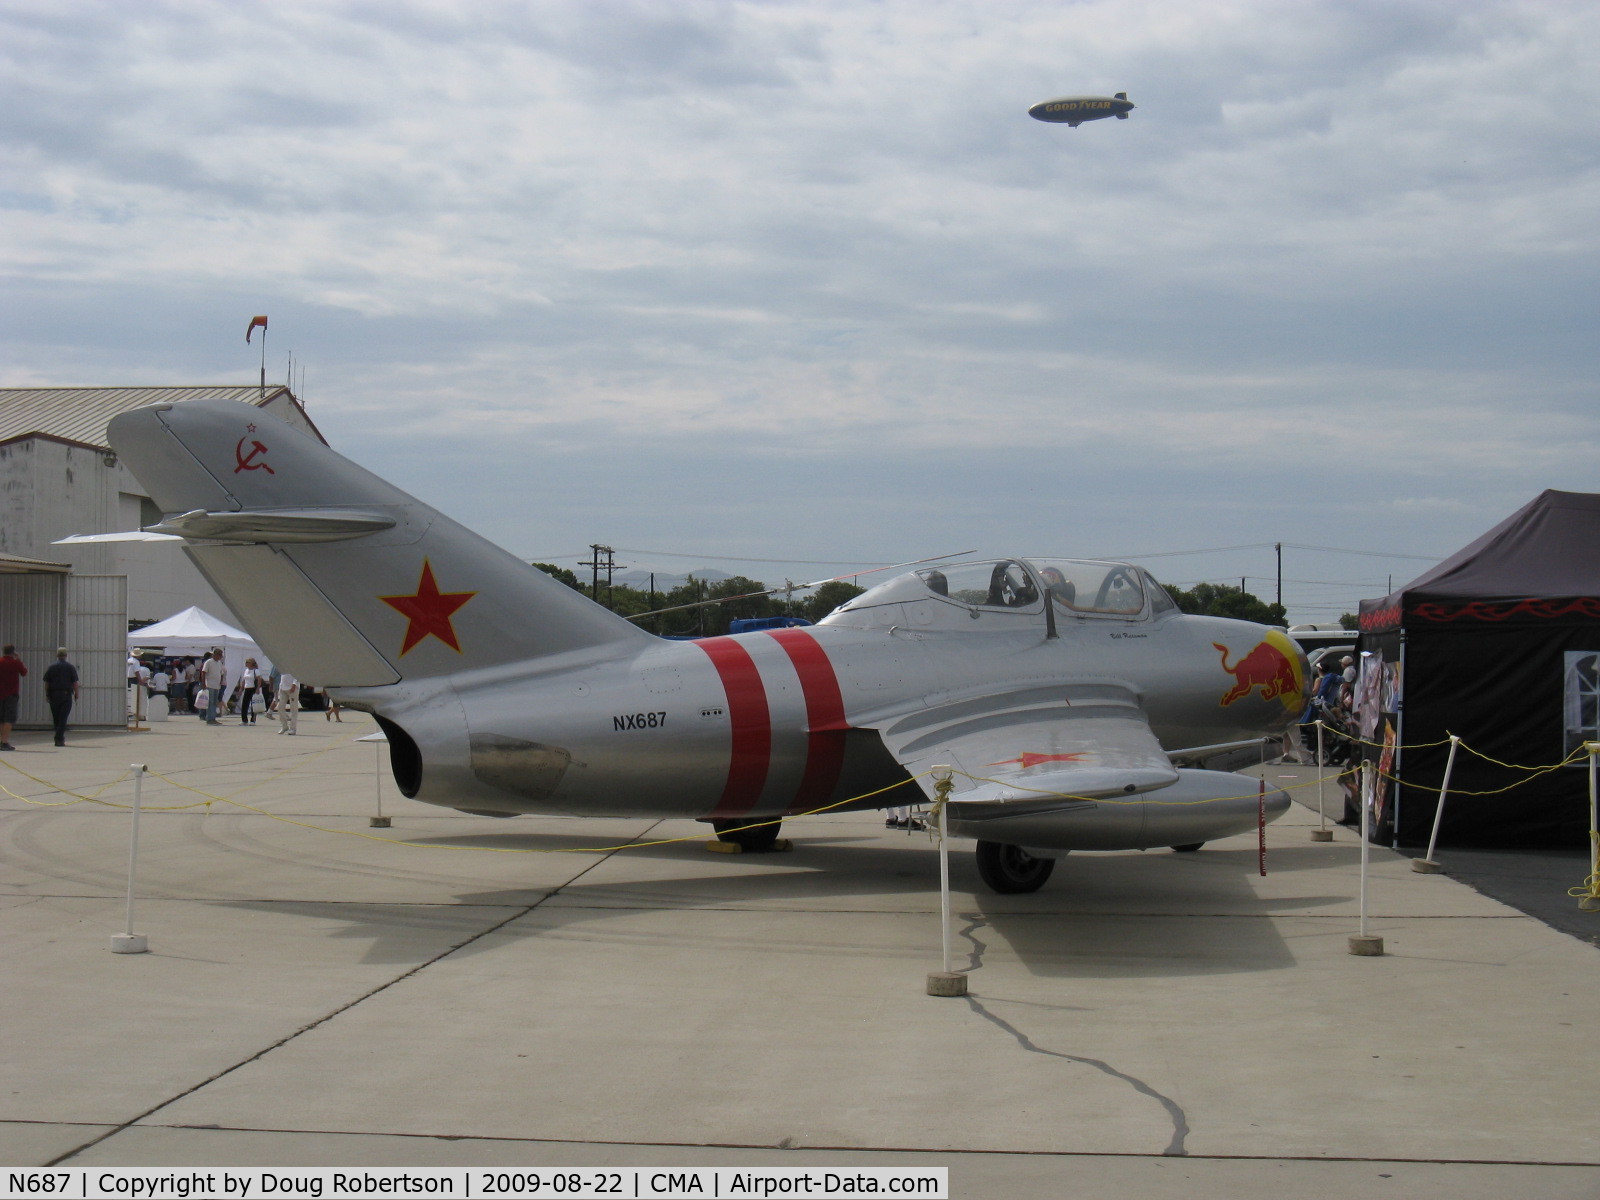 N687, 1953 Mikoyan-Gurevich MiG-15UTI C/N 1A02005, 1953 Mikoyan Gurevich MIG 15UTI tandem trainer 'Red Bull', Klimov VK-1A 5,952 lb st afterburning turbojet. NATO code name Midget. N10A Goodyear 'Spirit of America' Blimp in background sky.